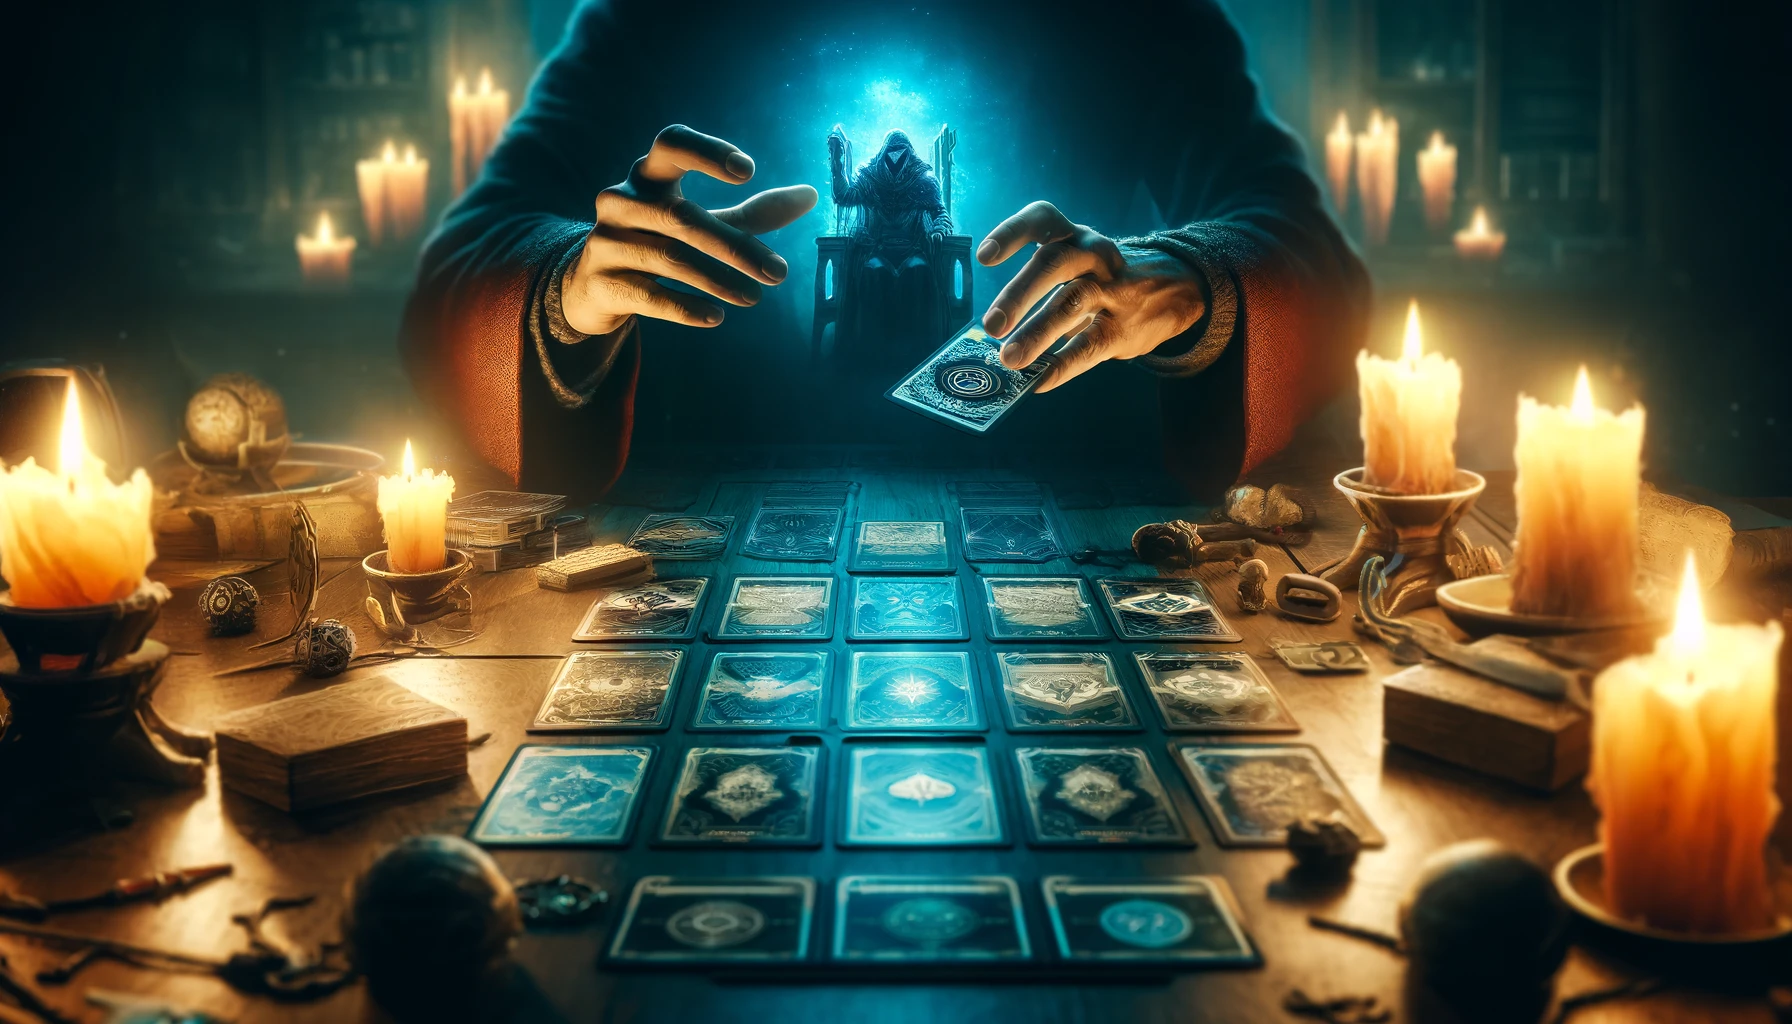 Mysterious figure dealing tarot cards illuminated by candlelight